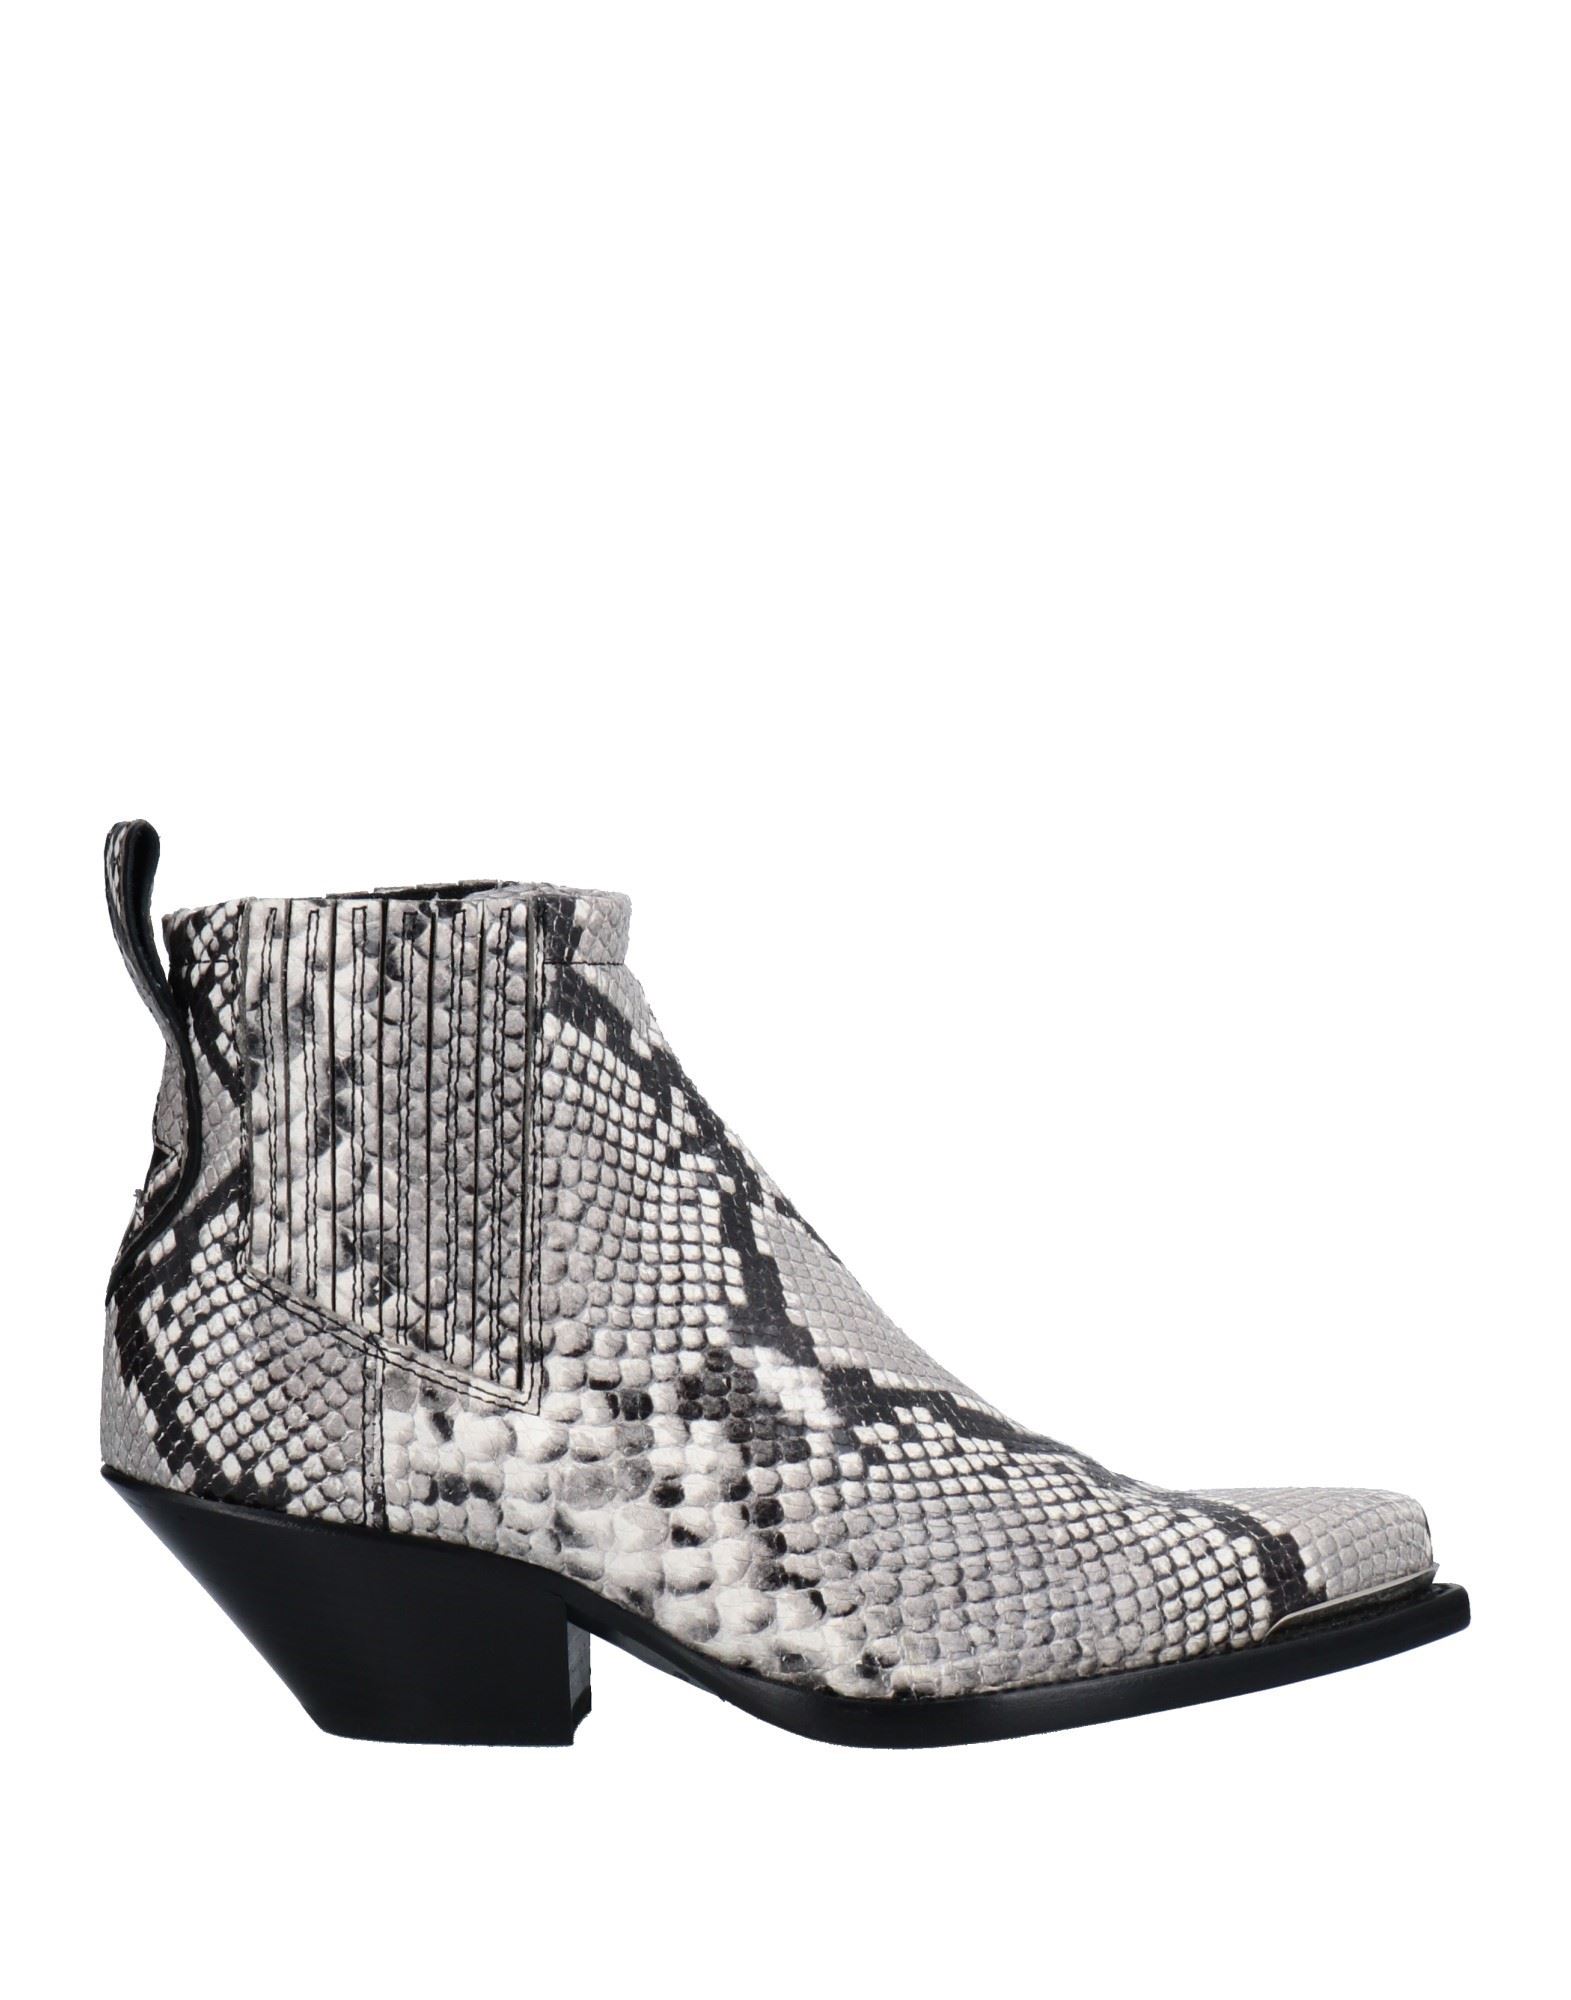 Materia Prima By Goffredo Fantini Ankle Boots In Light Grey